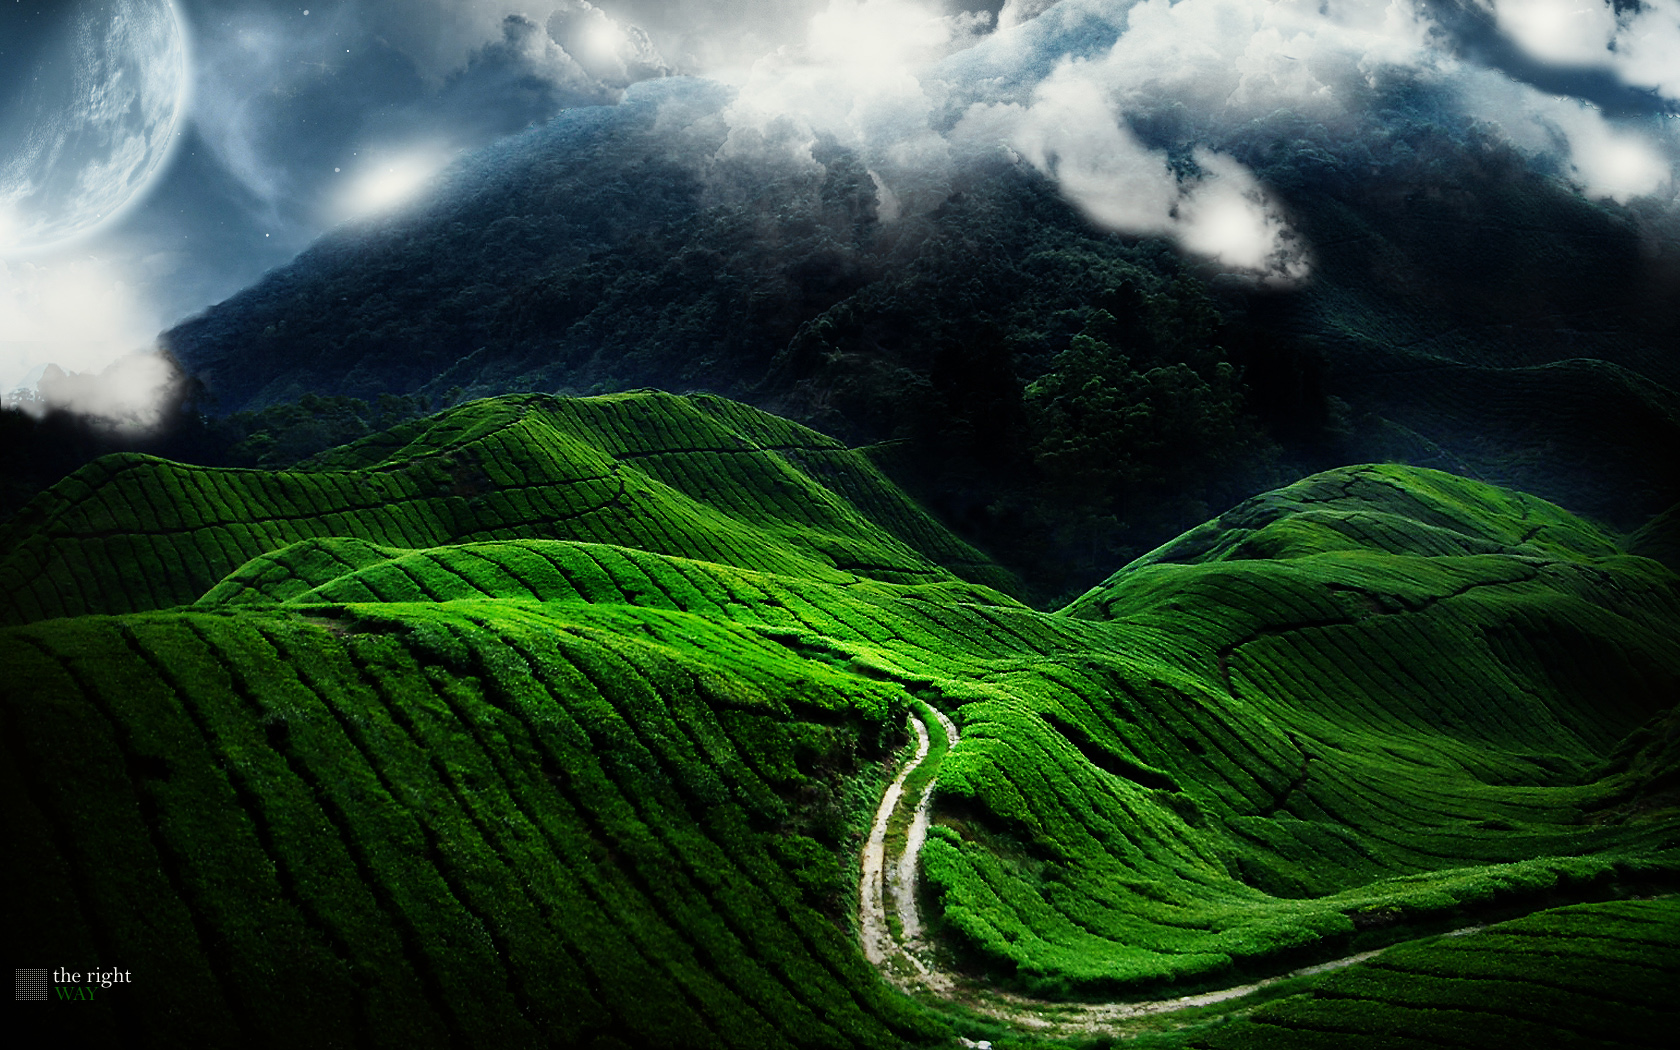 hill, landscape, green, man made, moon, road